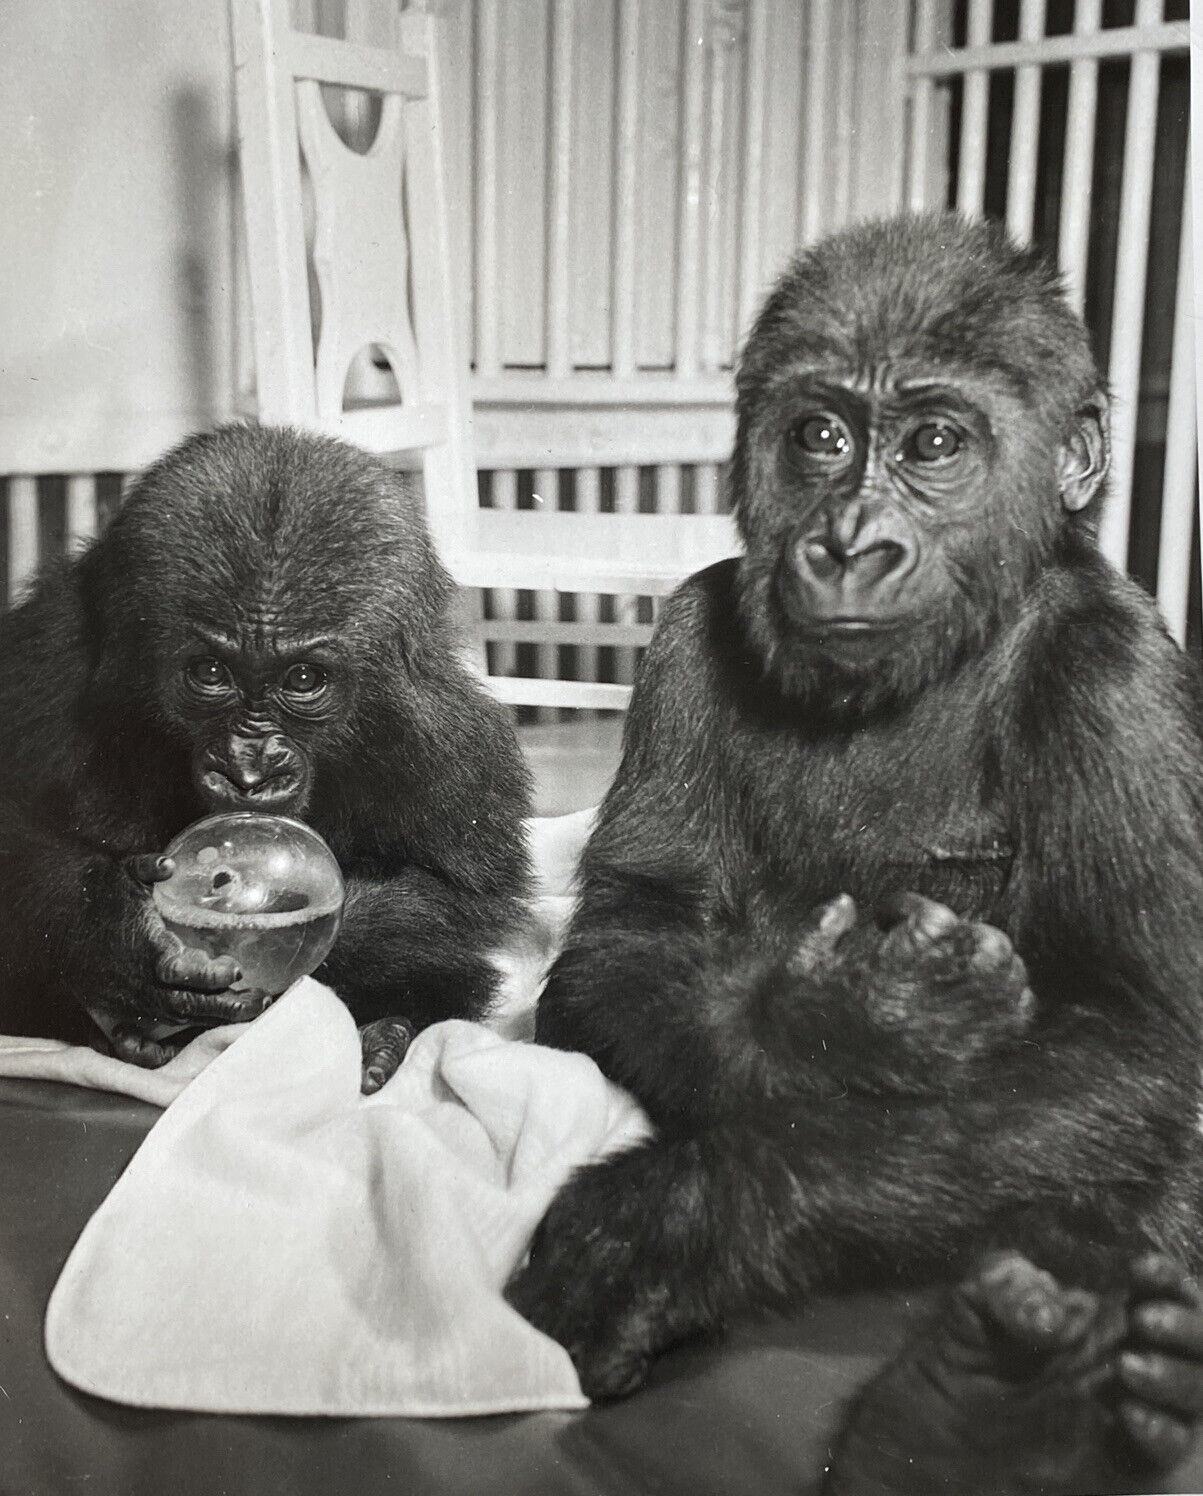 Circus Baby Gorillas Performer Vintage Snapshot Photo by Eileen Darby